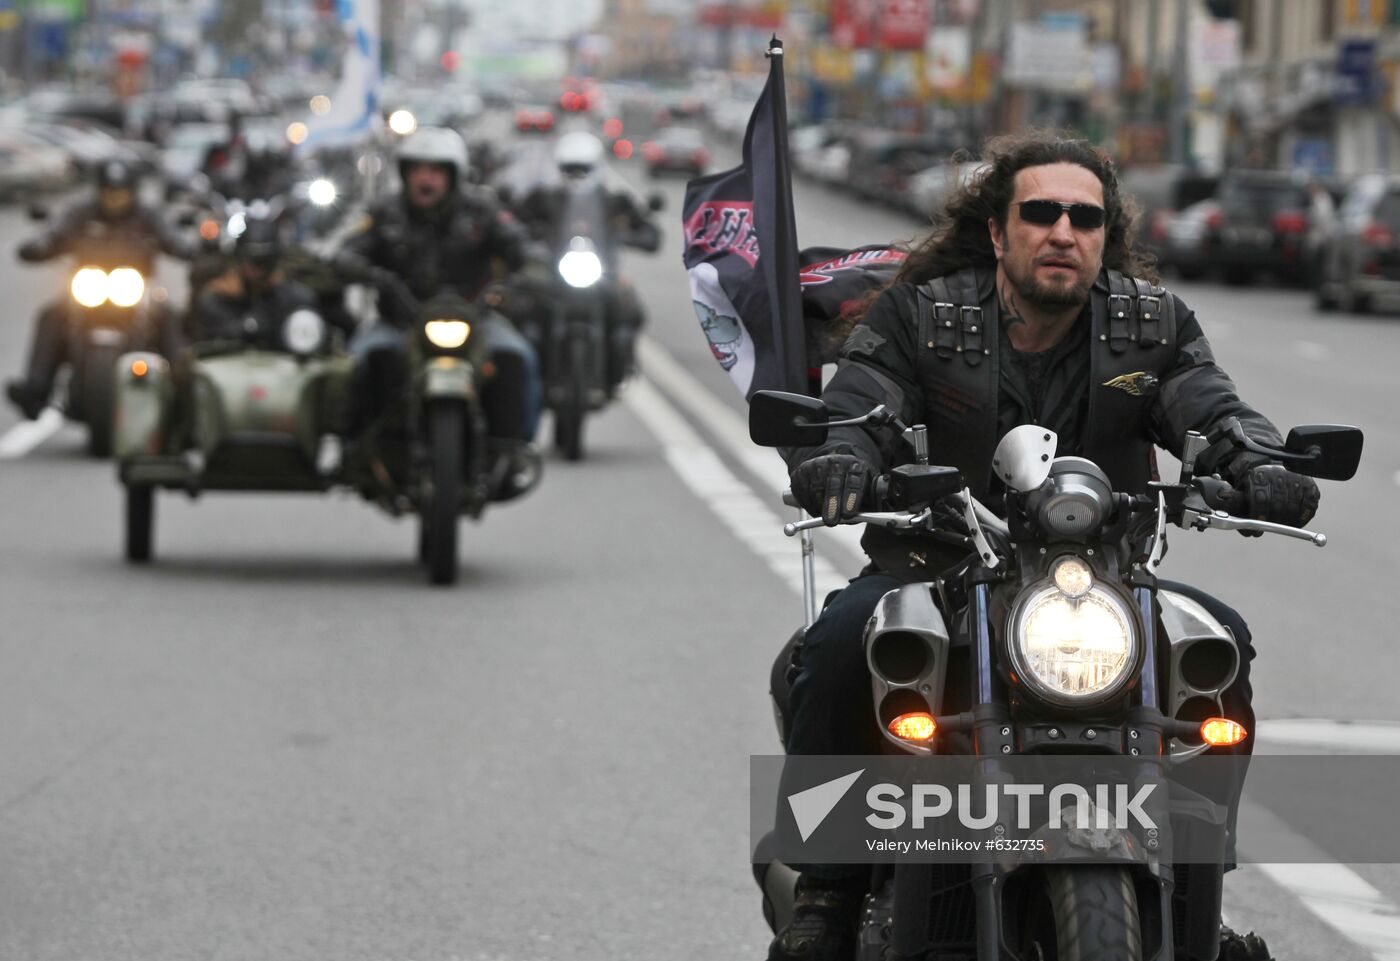 Opening of biker season in Moscow